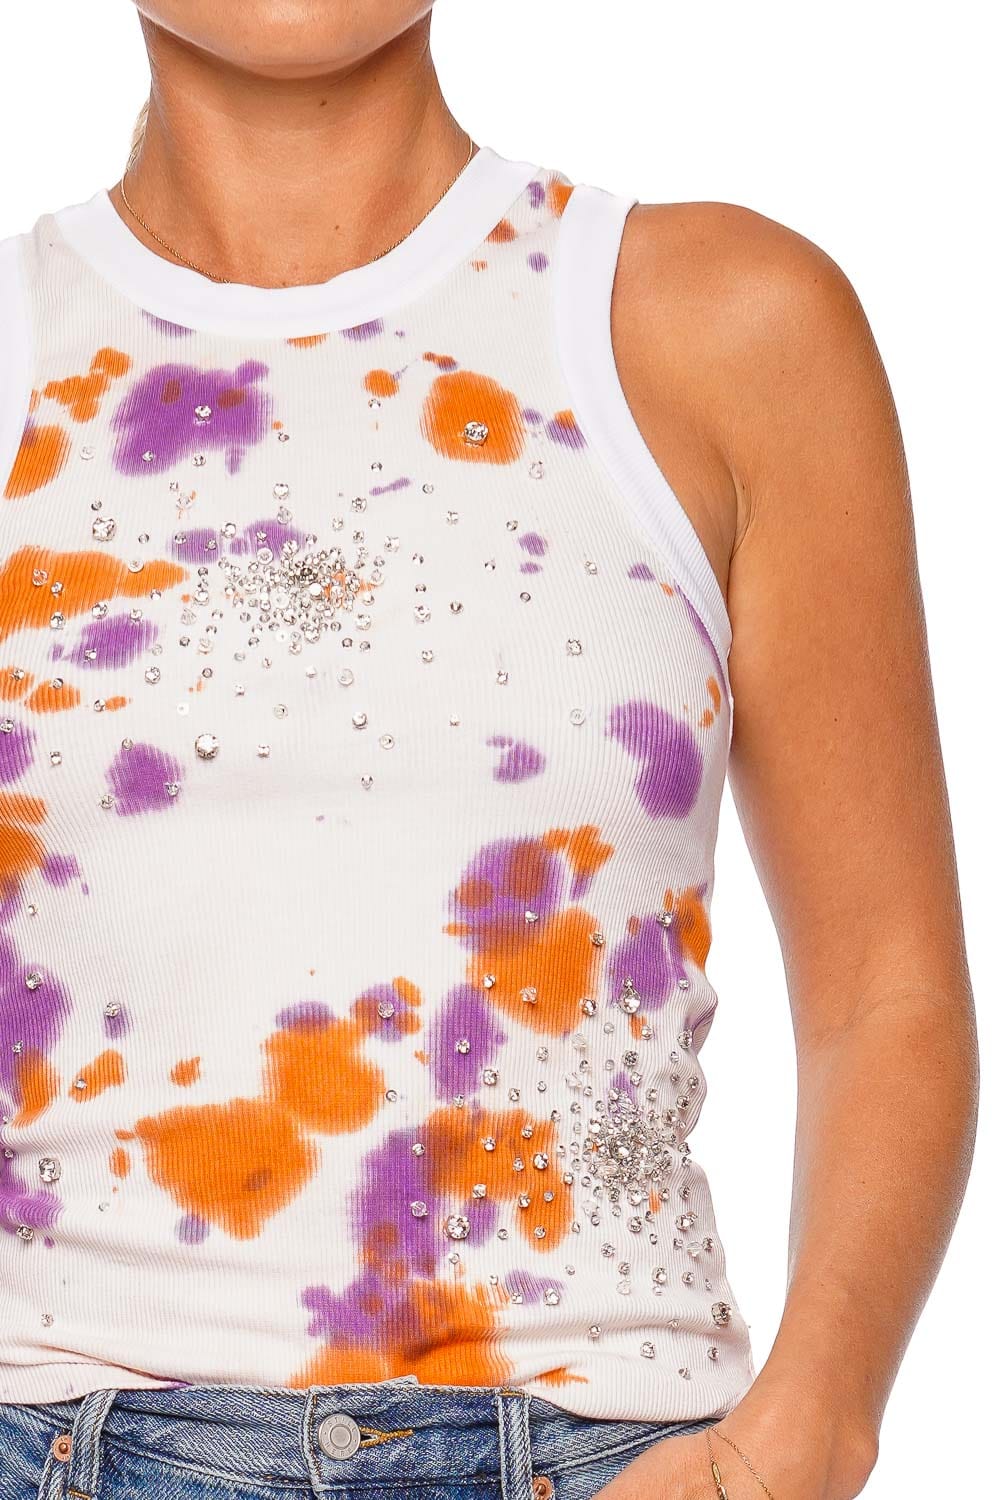 DES_PHEMMES Tie Dye Splash Embroidery Tank Top DP612 LAVANDER/WHITE/ORANGE